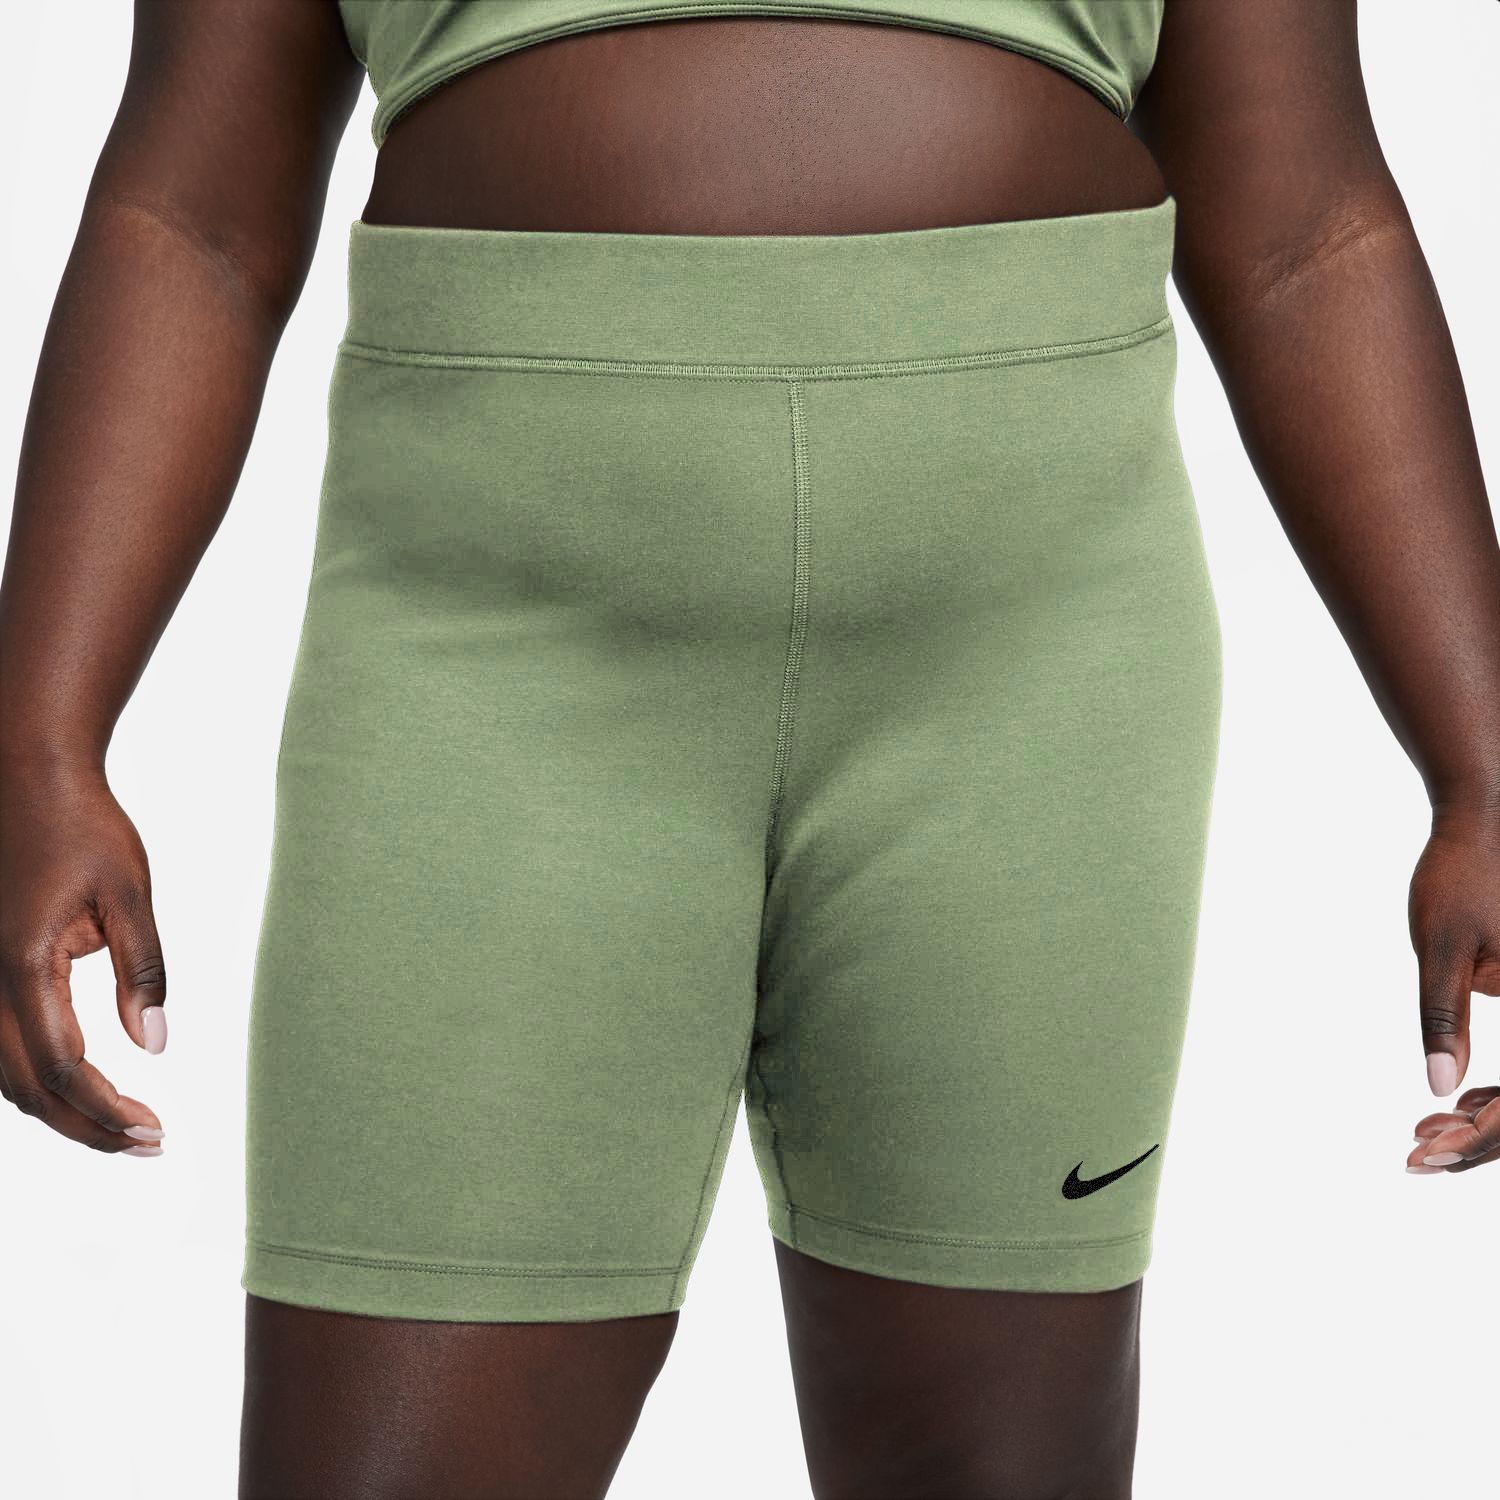 Women's Nike Red Kansas City Chiefs Plus Size Tempo Shorts